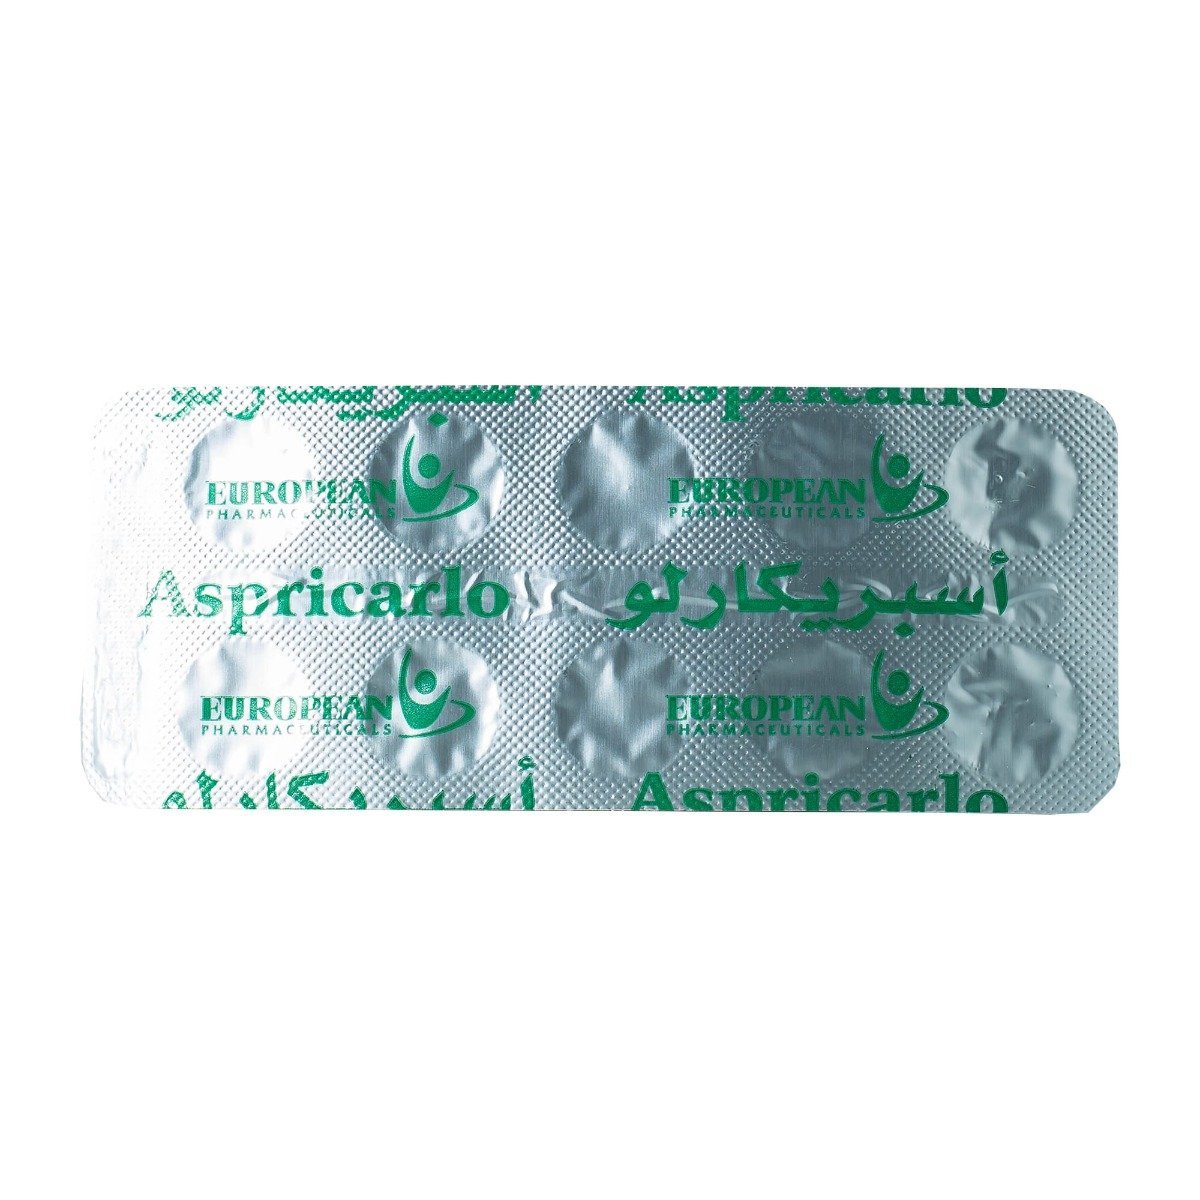 Aspricarlo - 30 Chewablet Tablets - Bloom Pharmacy